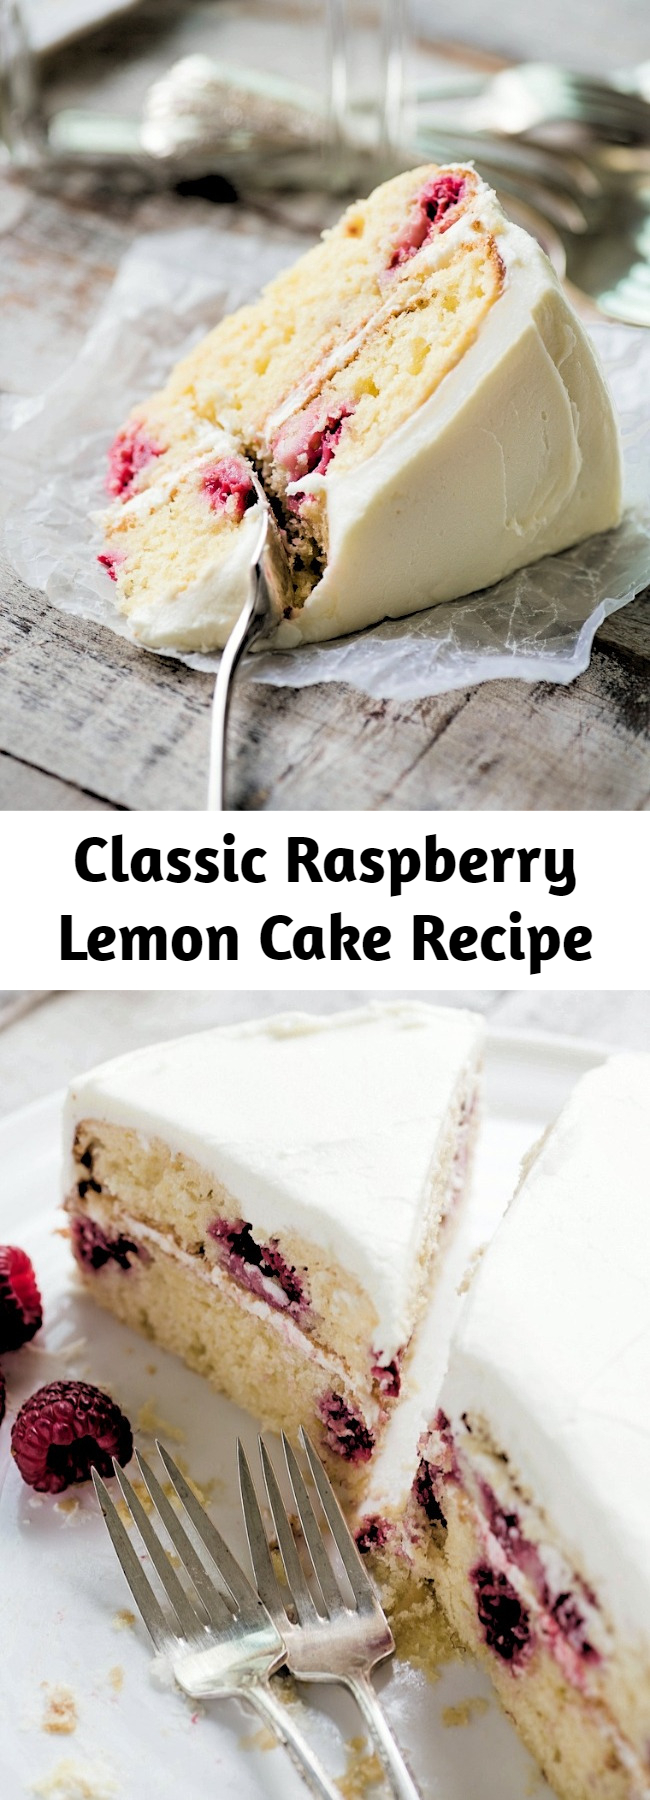 Classic Raspberry Lemon Cake Recipe